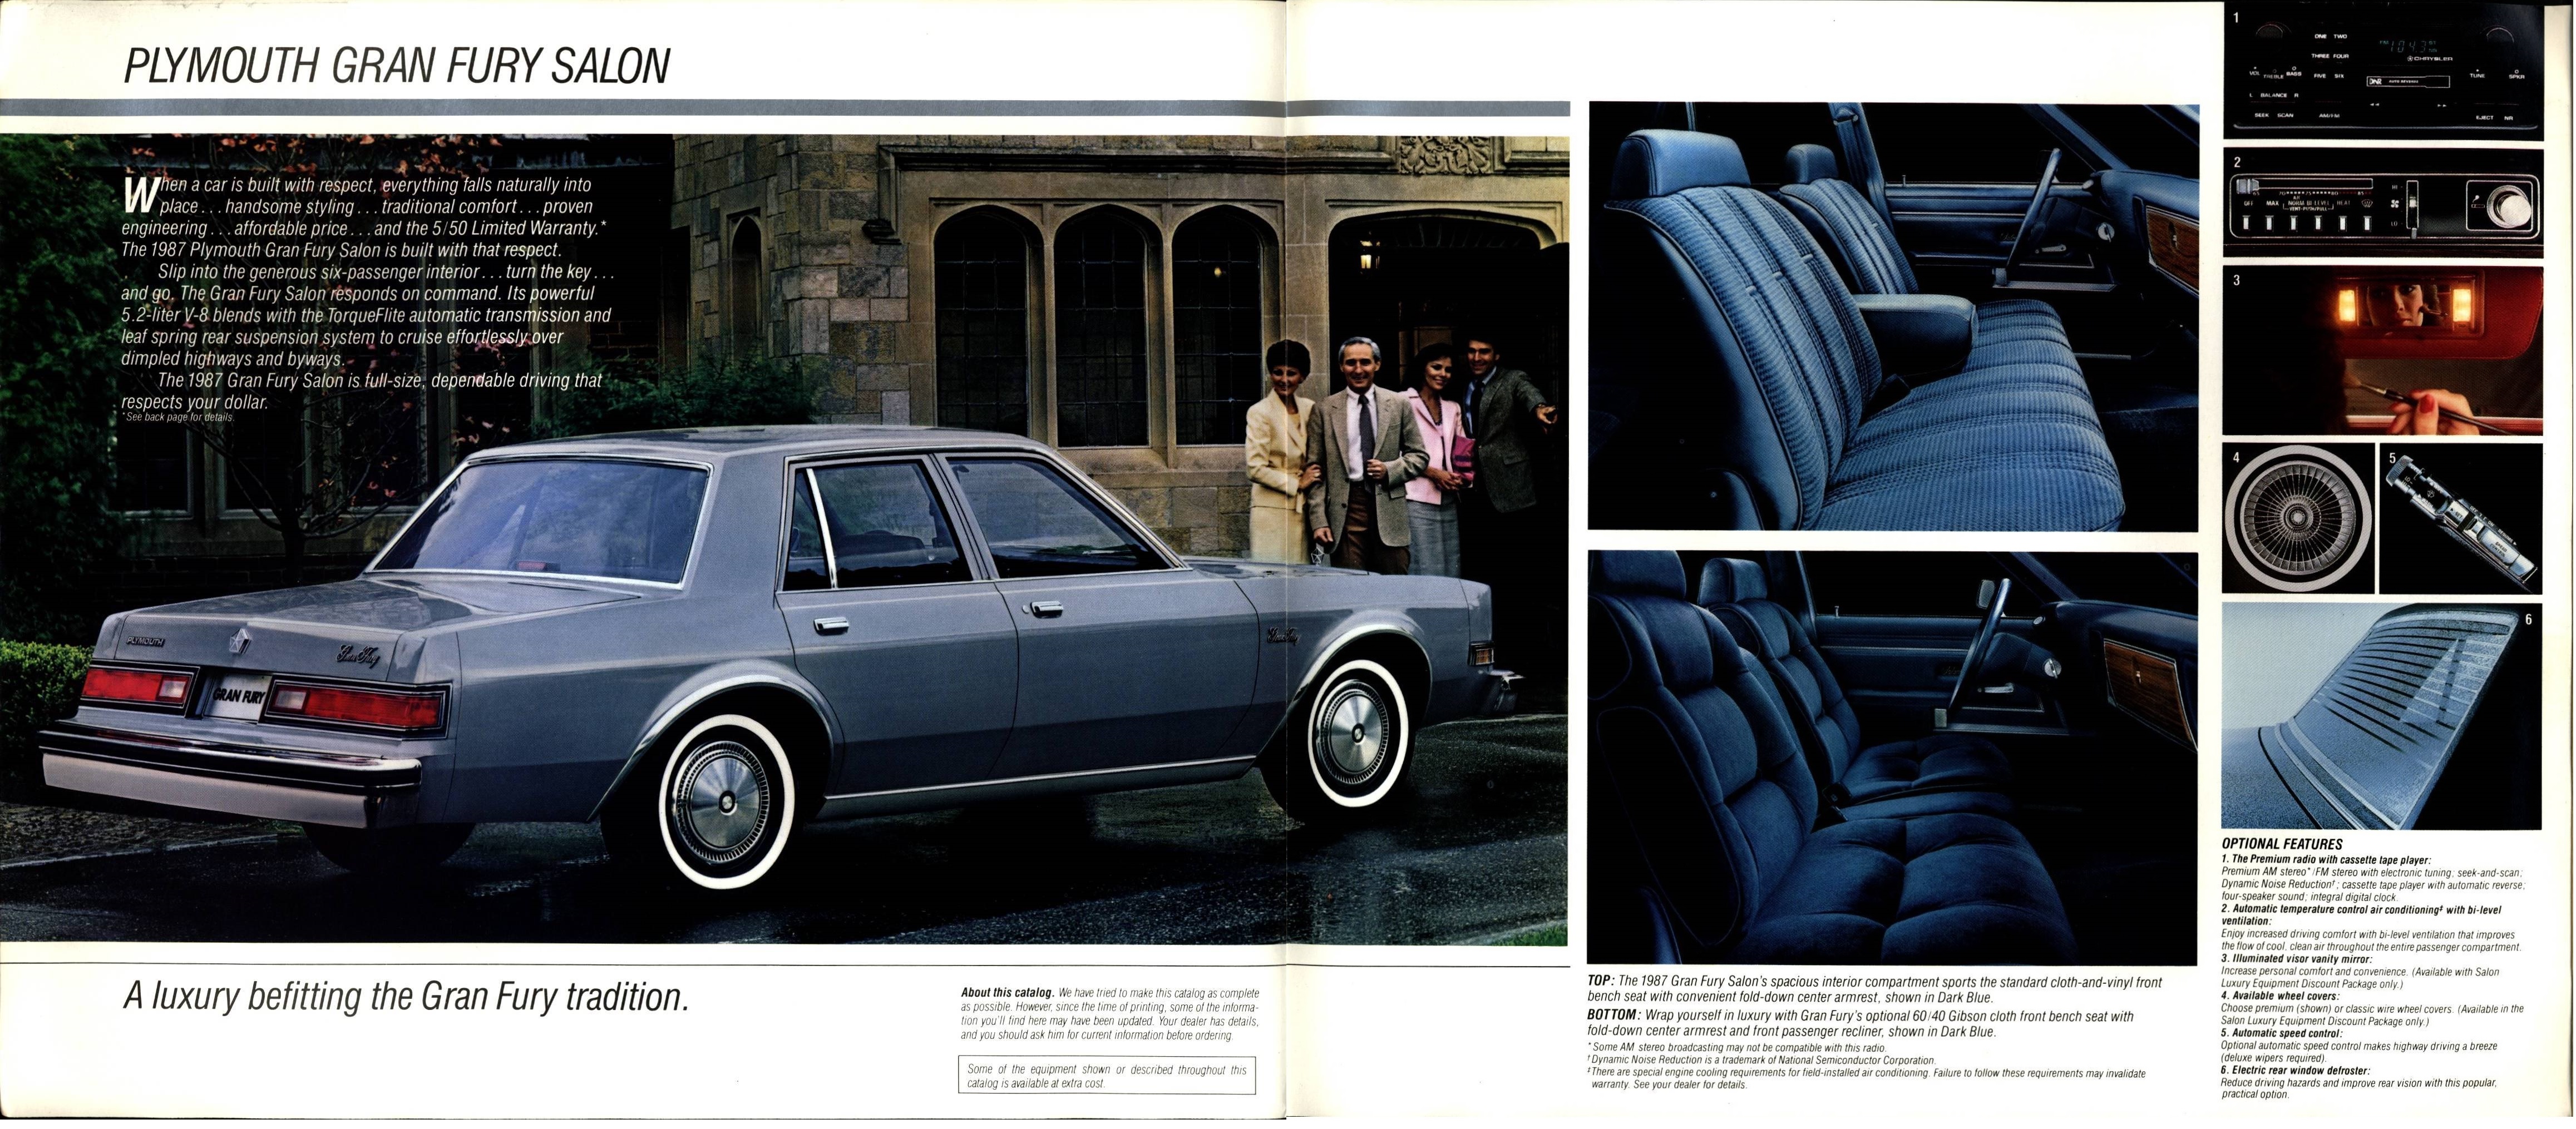 1987 Plymouth Gran Fury Salon Brochure 02-03